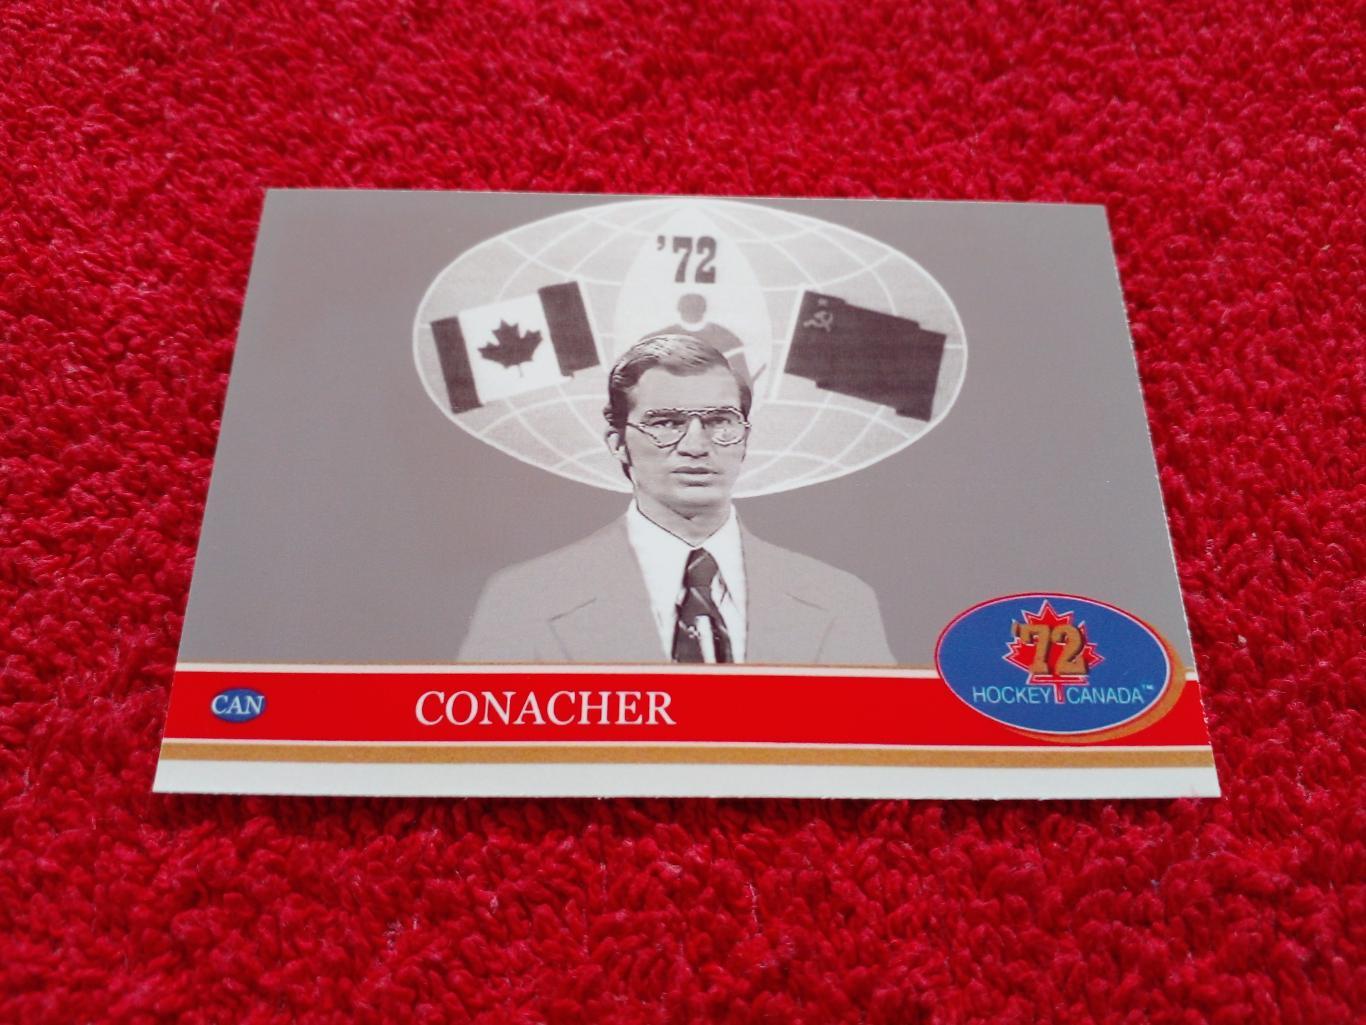 Брайэн Коначер. Хоккей СССР - Канада 1972. Редкая карточка.